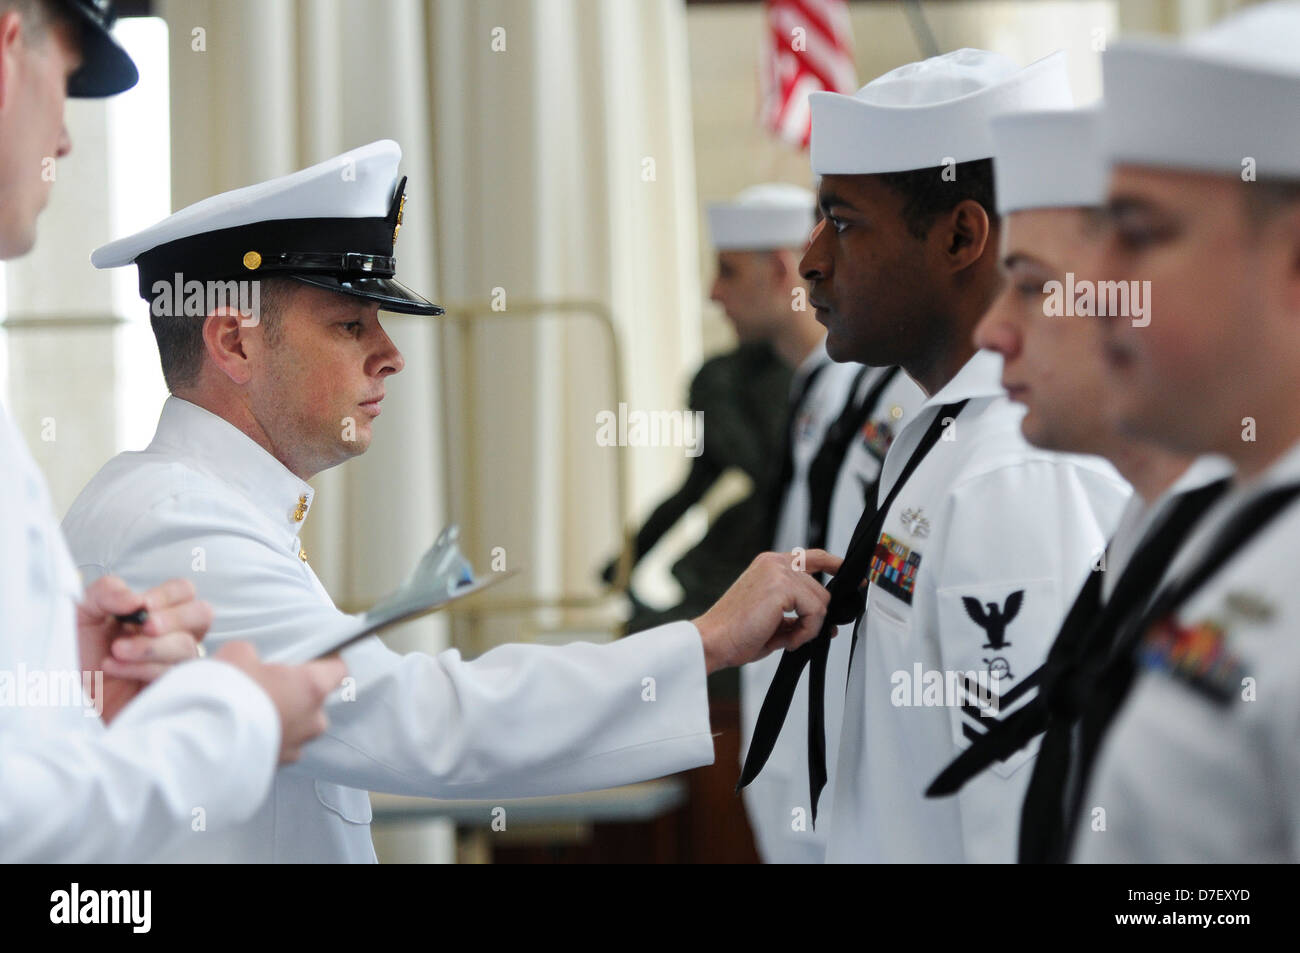 Sailors conduct a uniform inspection. Stock Photo